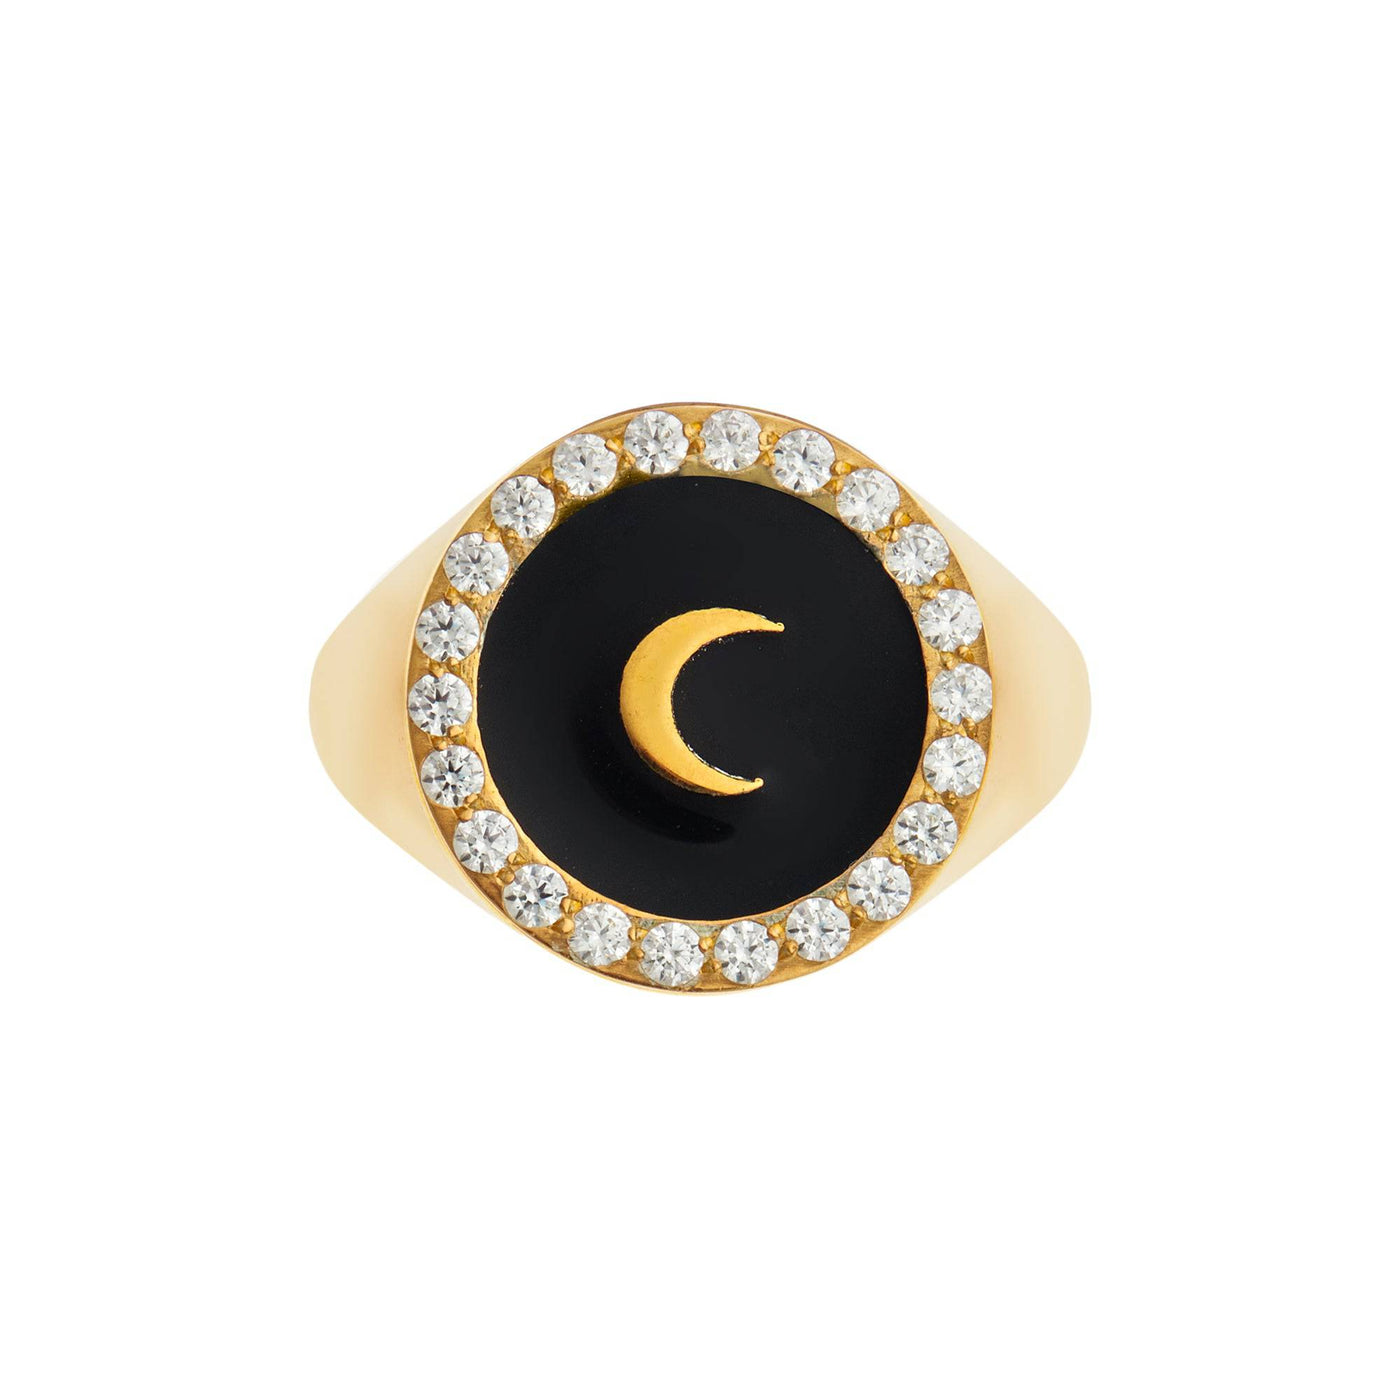 Moon Enamel Crystal Chevalier Ring - Eye M Neon Rocks - Ileana Makri store